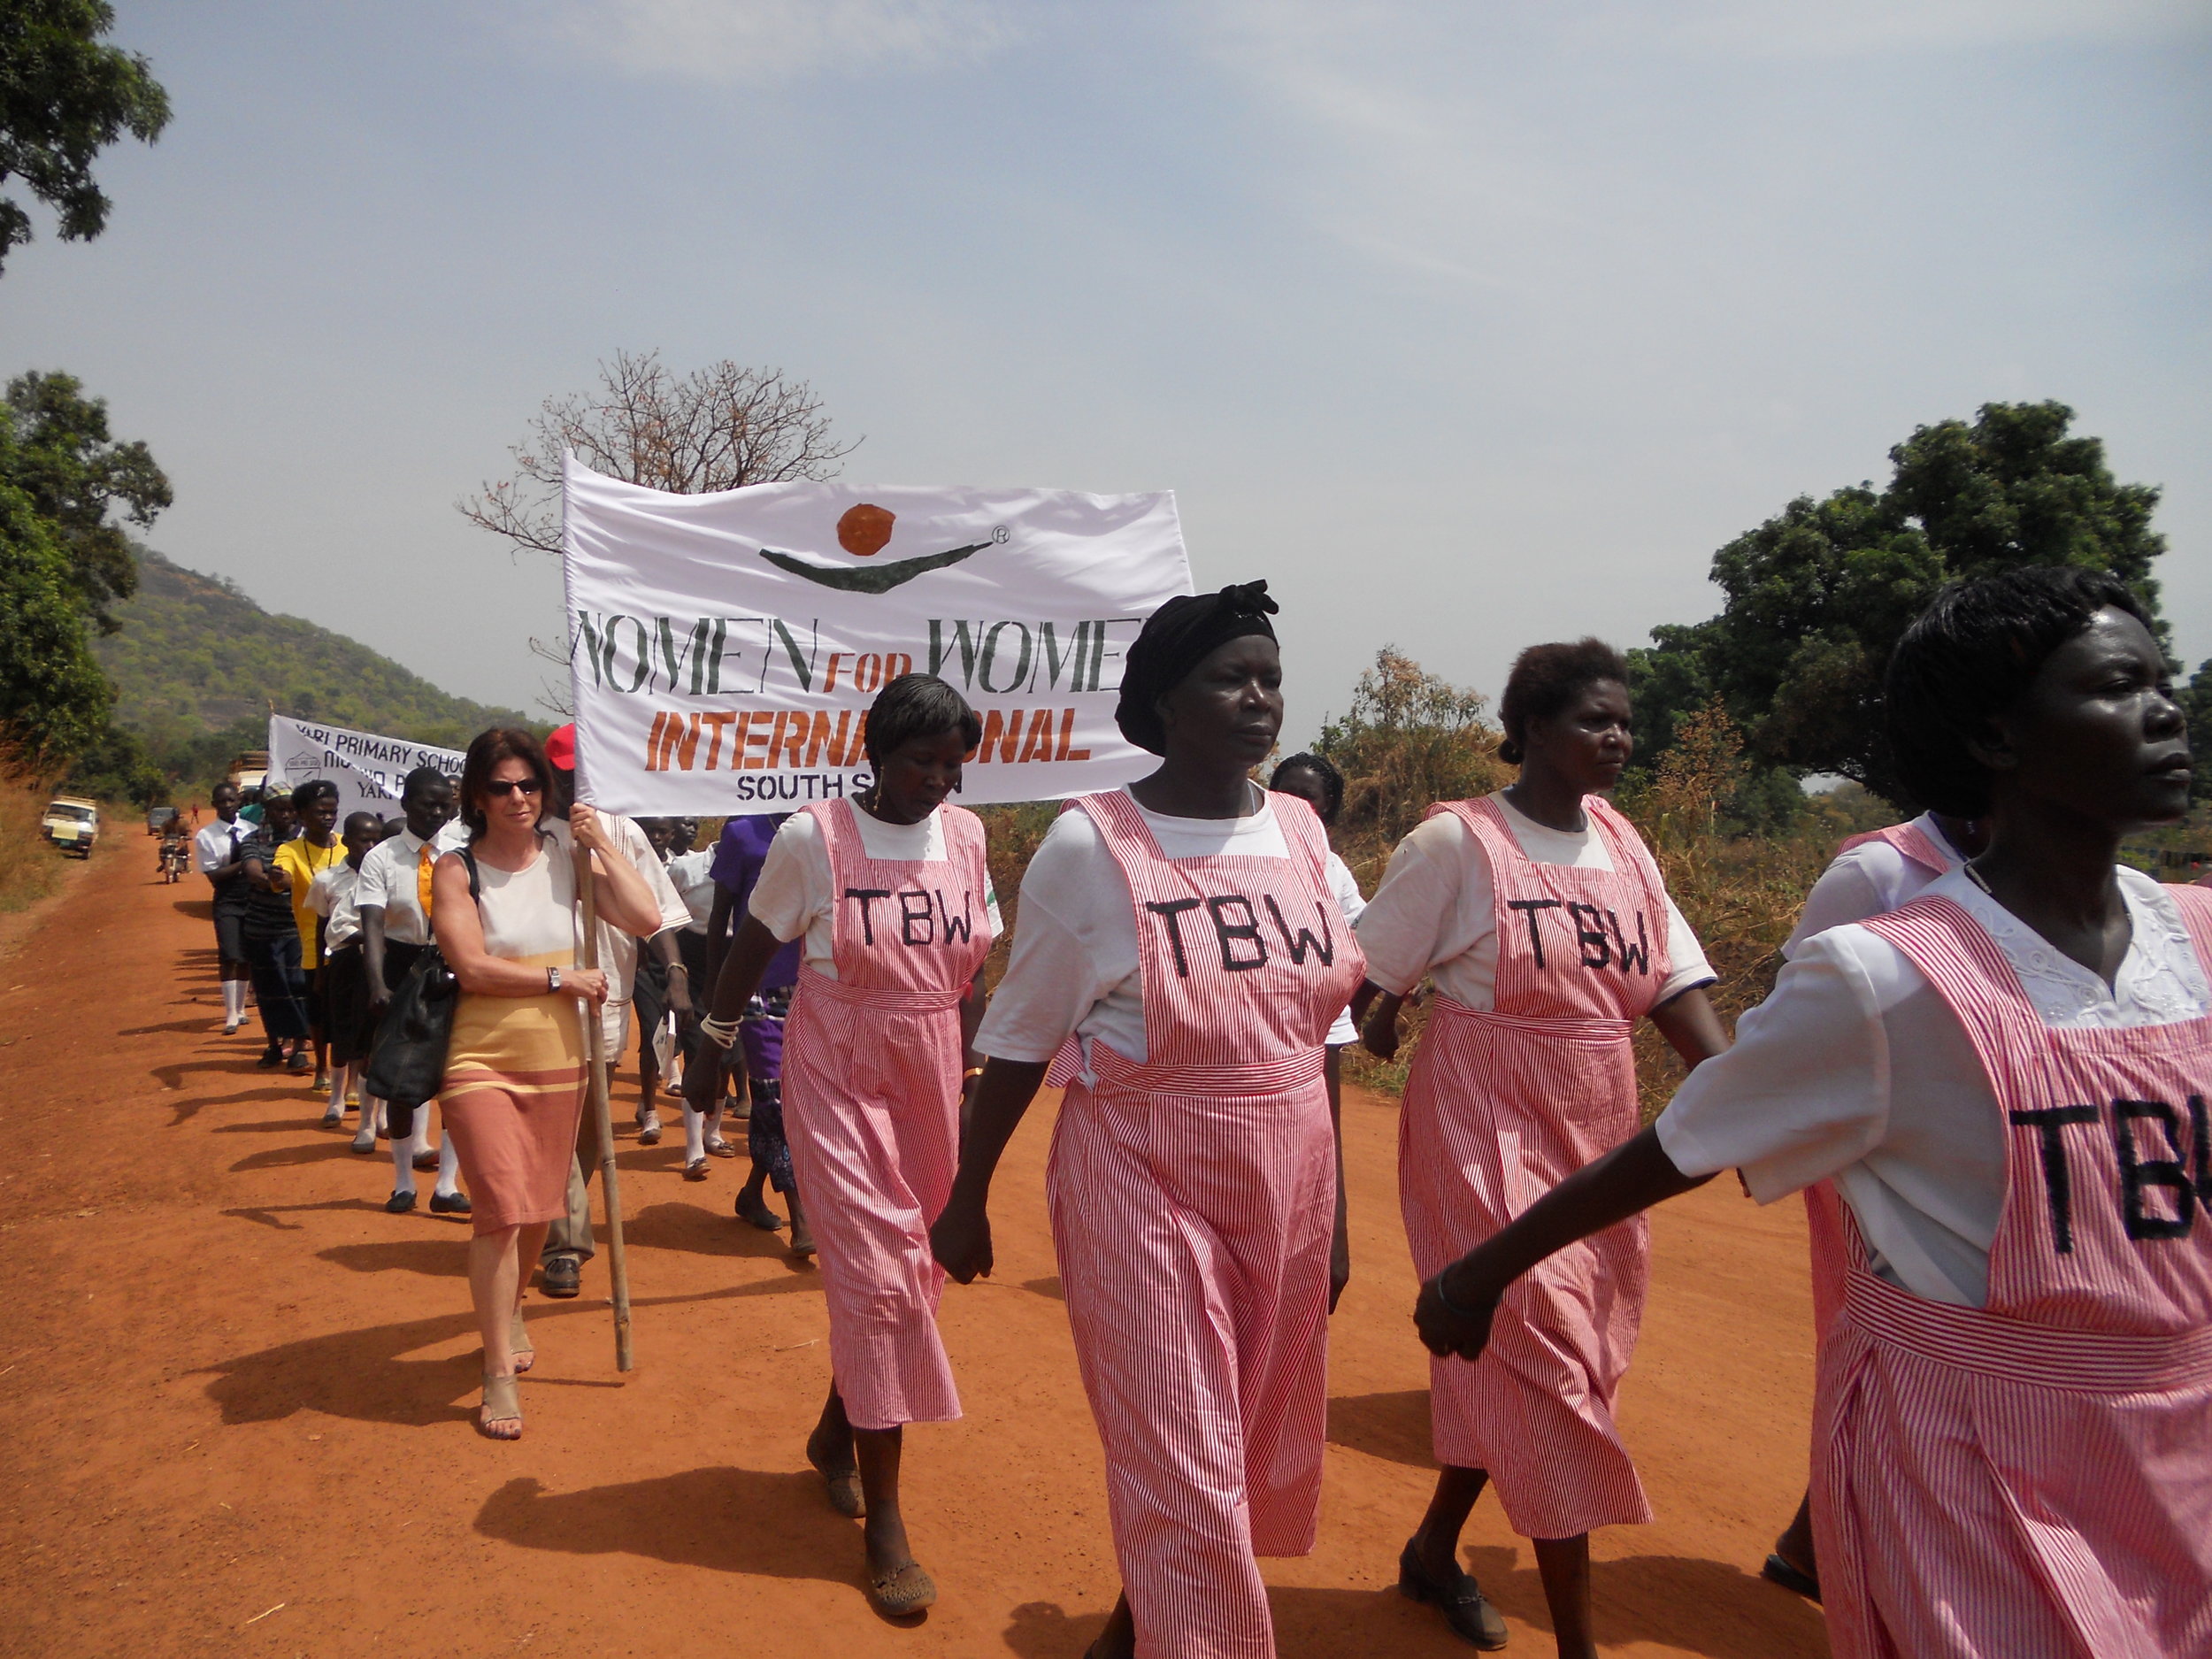 Karen marching on International Women's Day in South Sudan